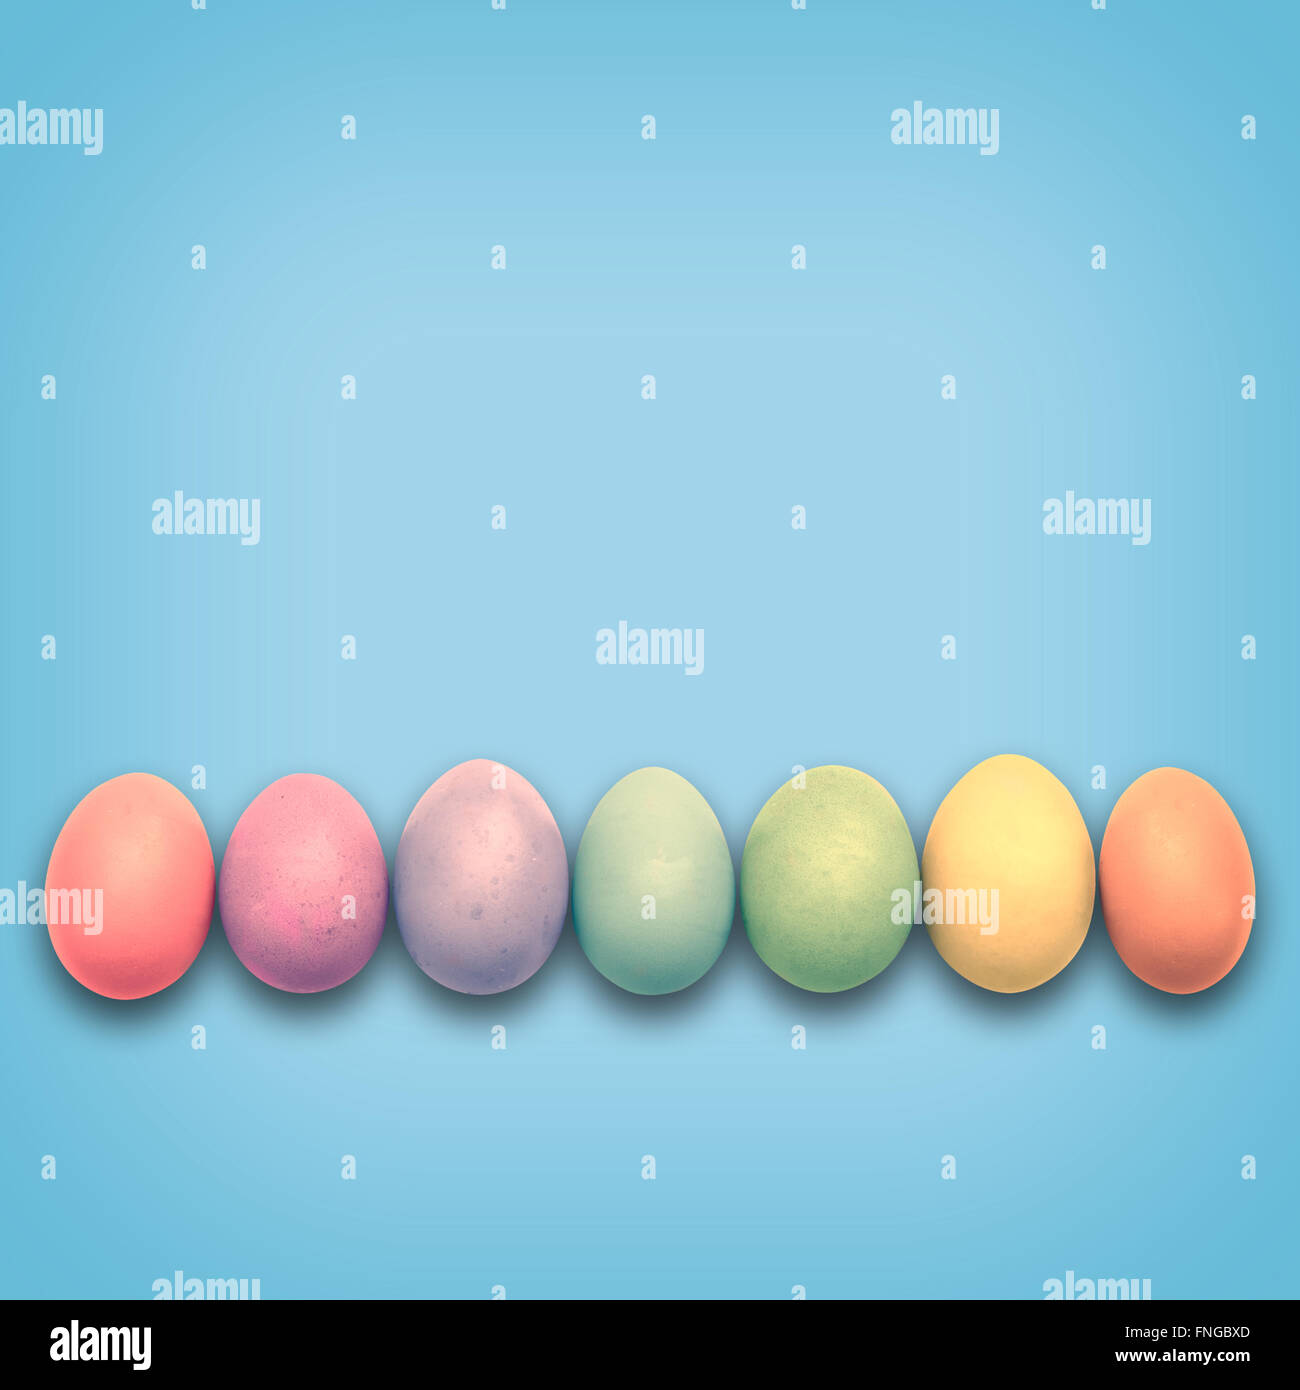 Pastel Easter eggs aligned, blue background Stock Photo